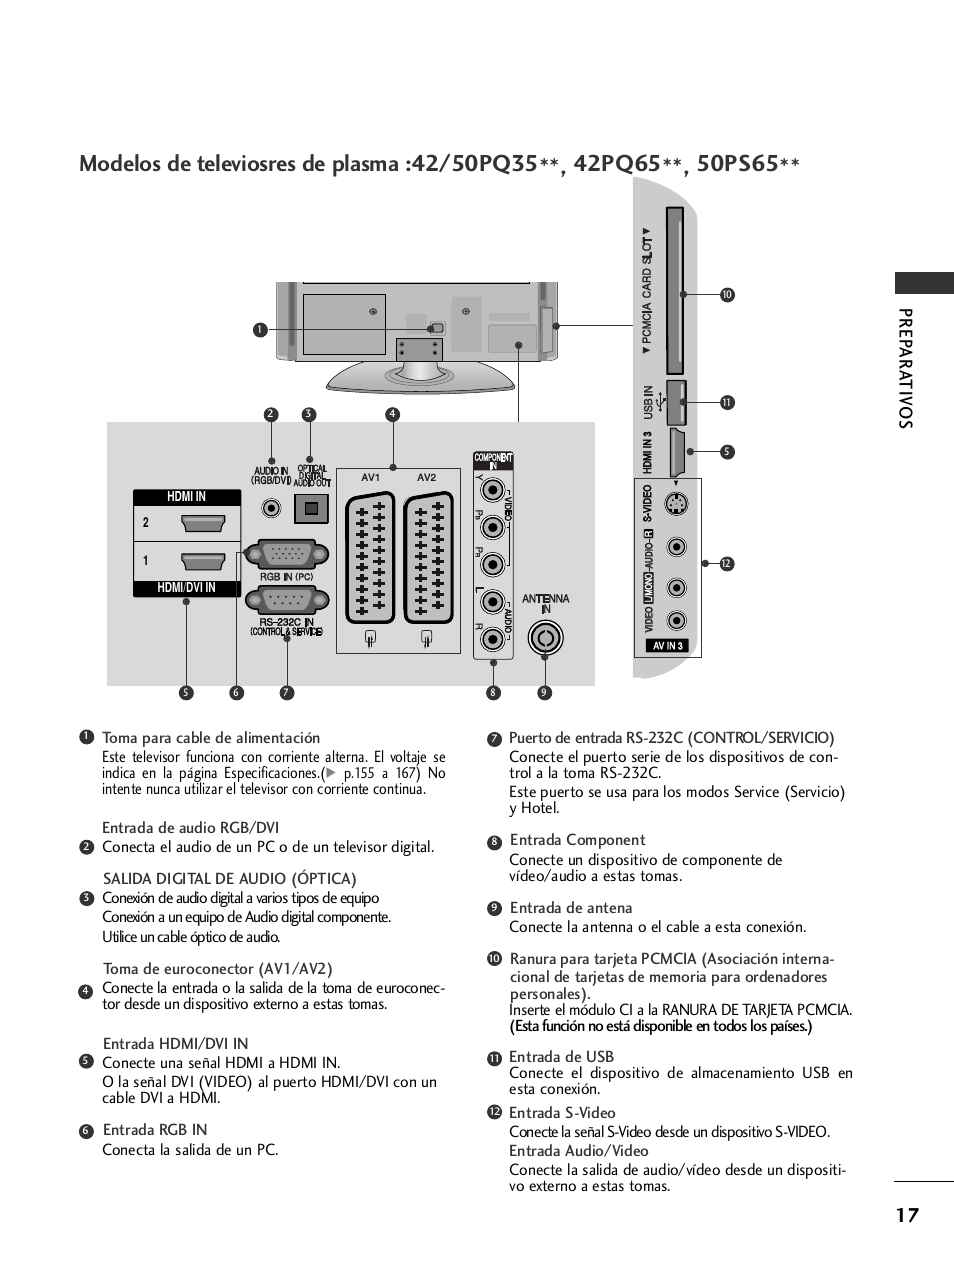 Prep ar a tiv os | LG 32LH40 Manual del usuario | Página 19 / 180